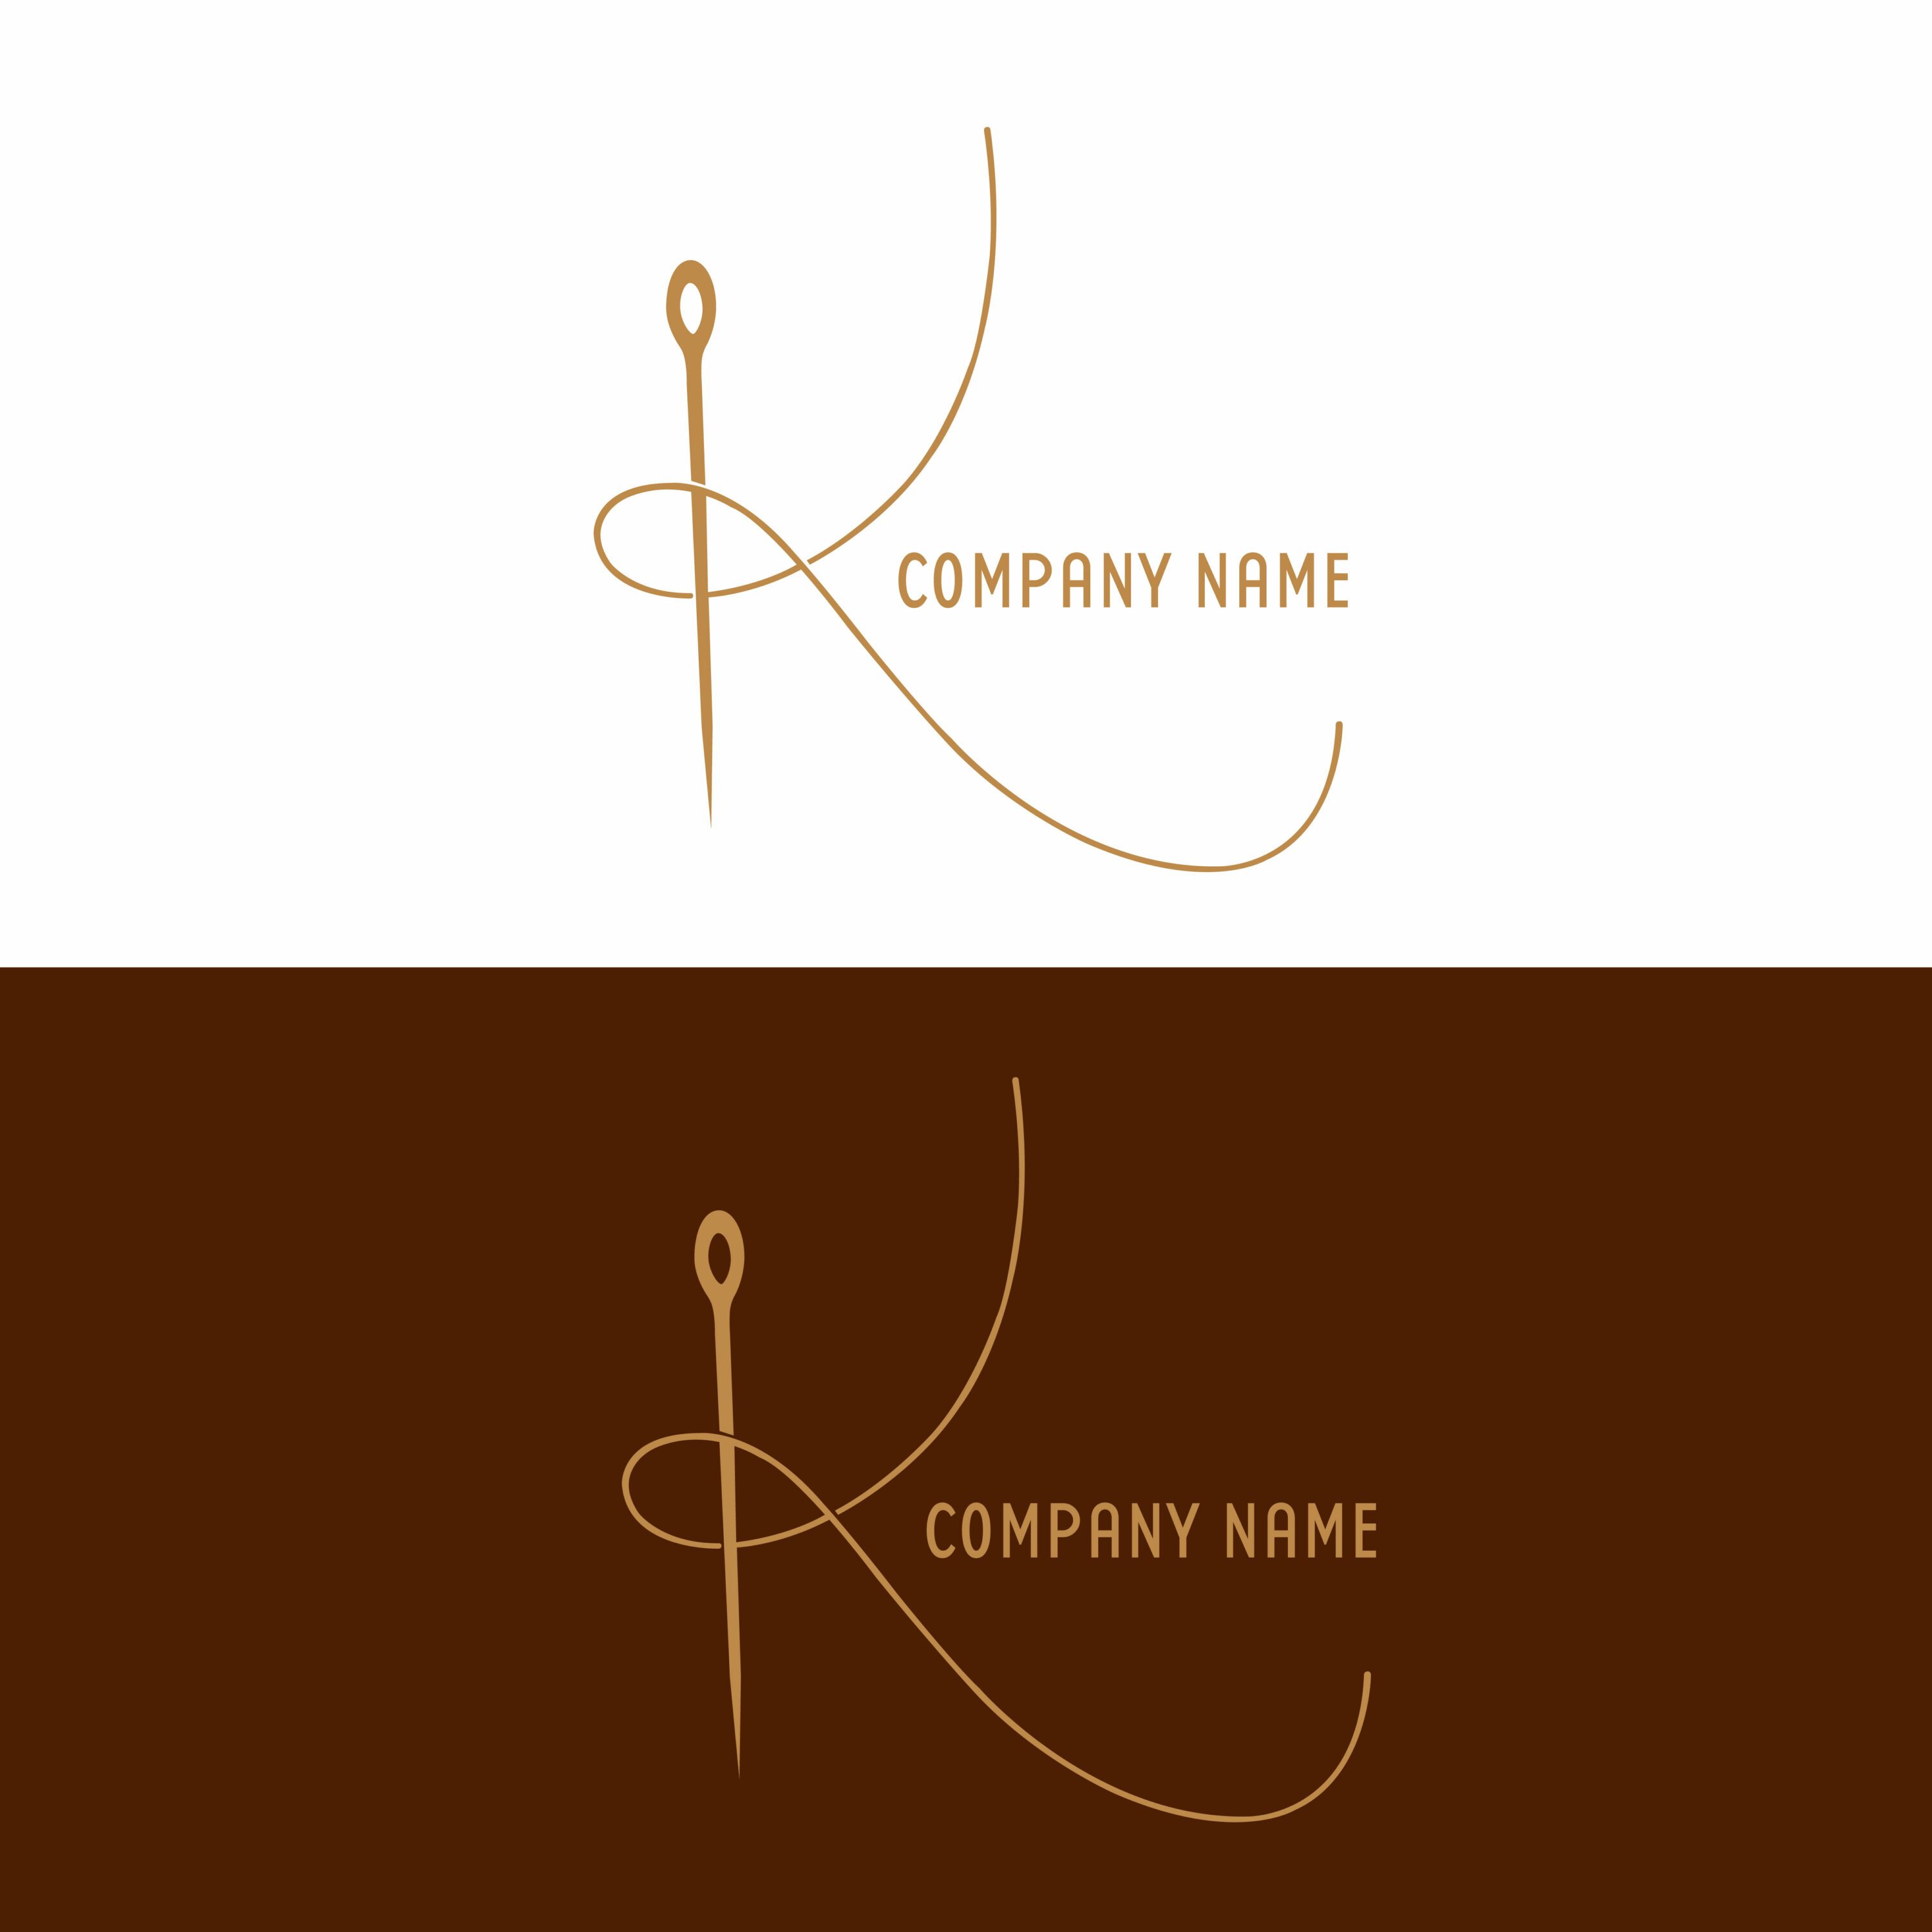 shop logo design